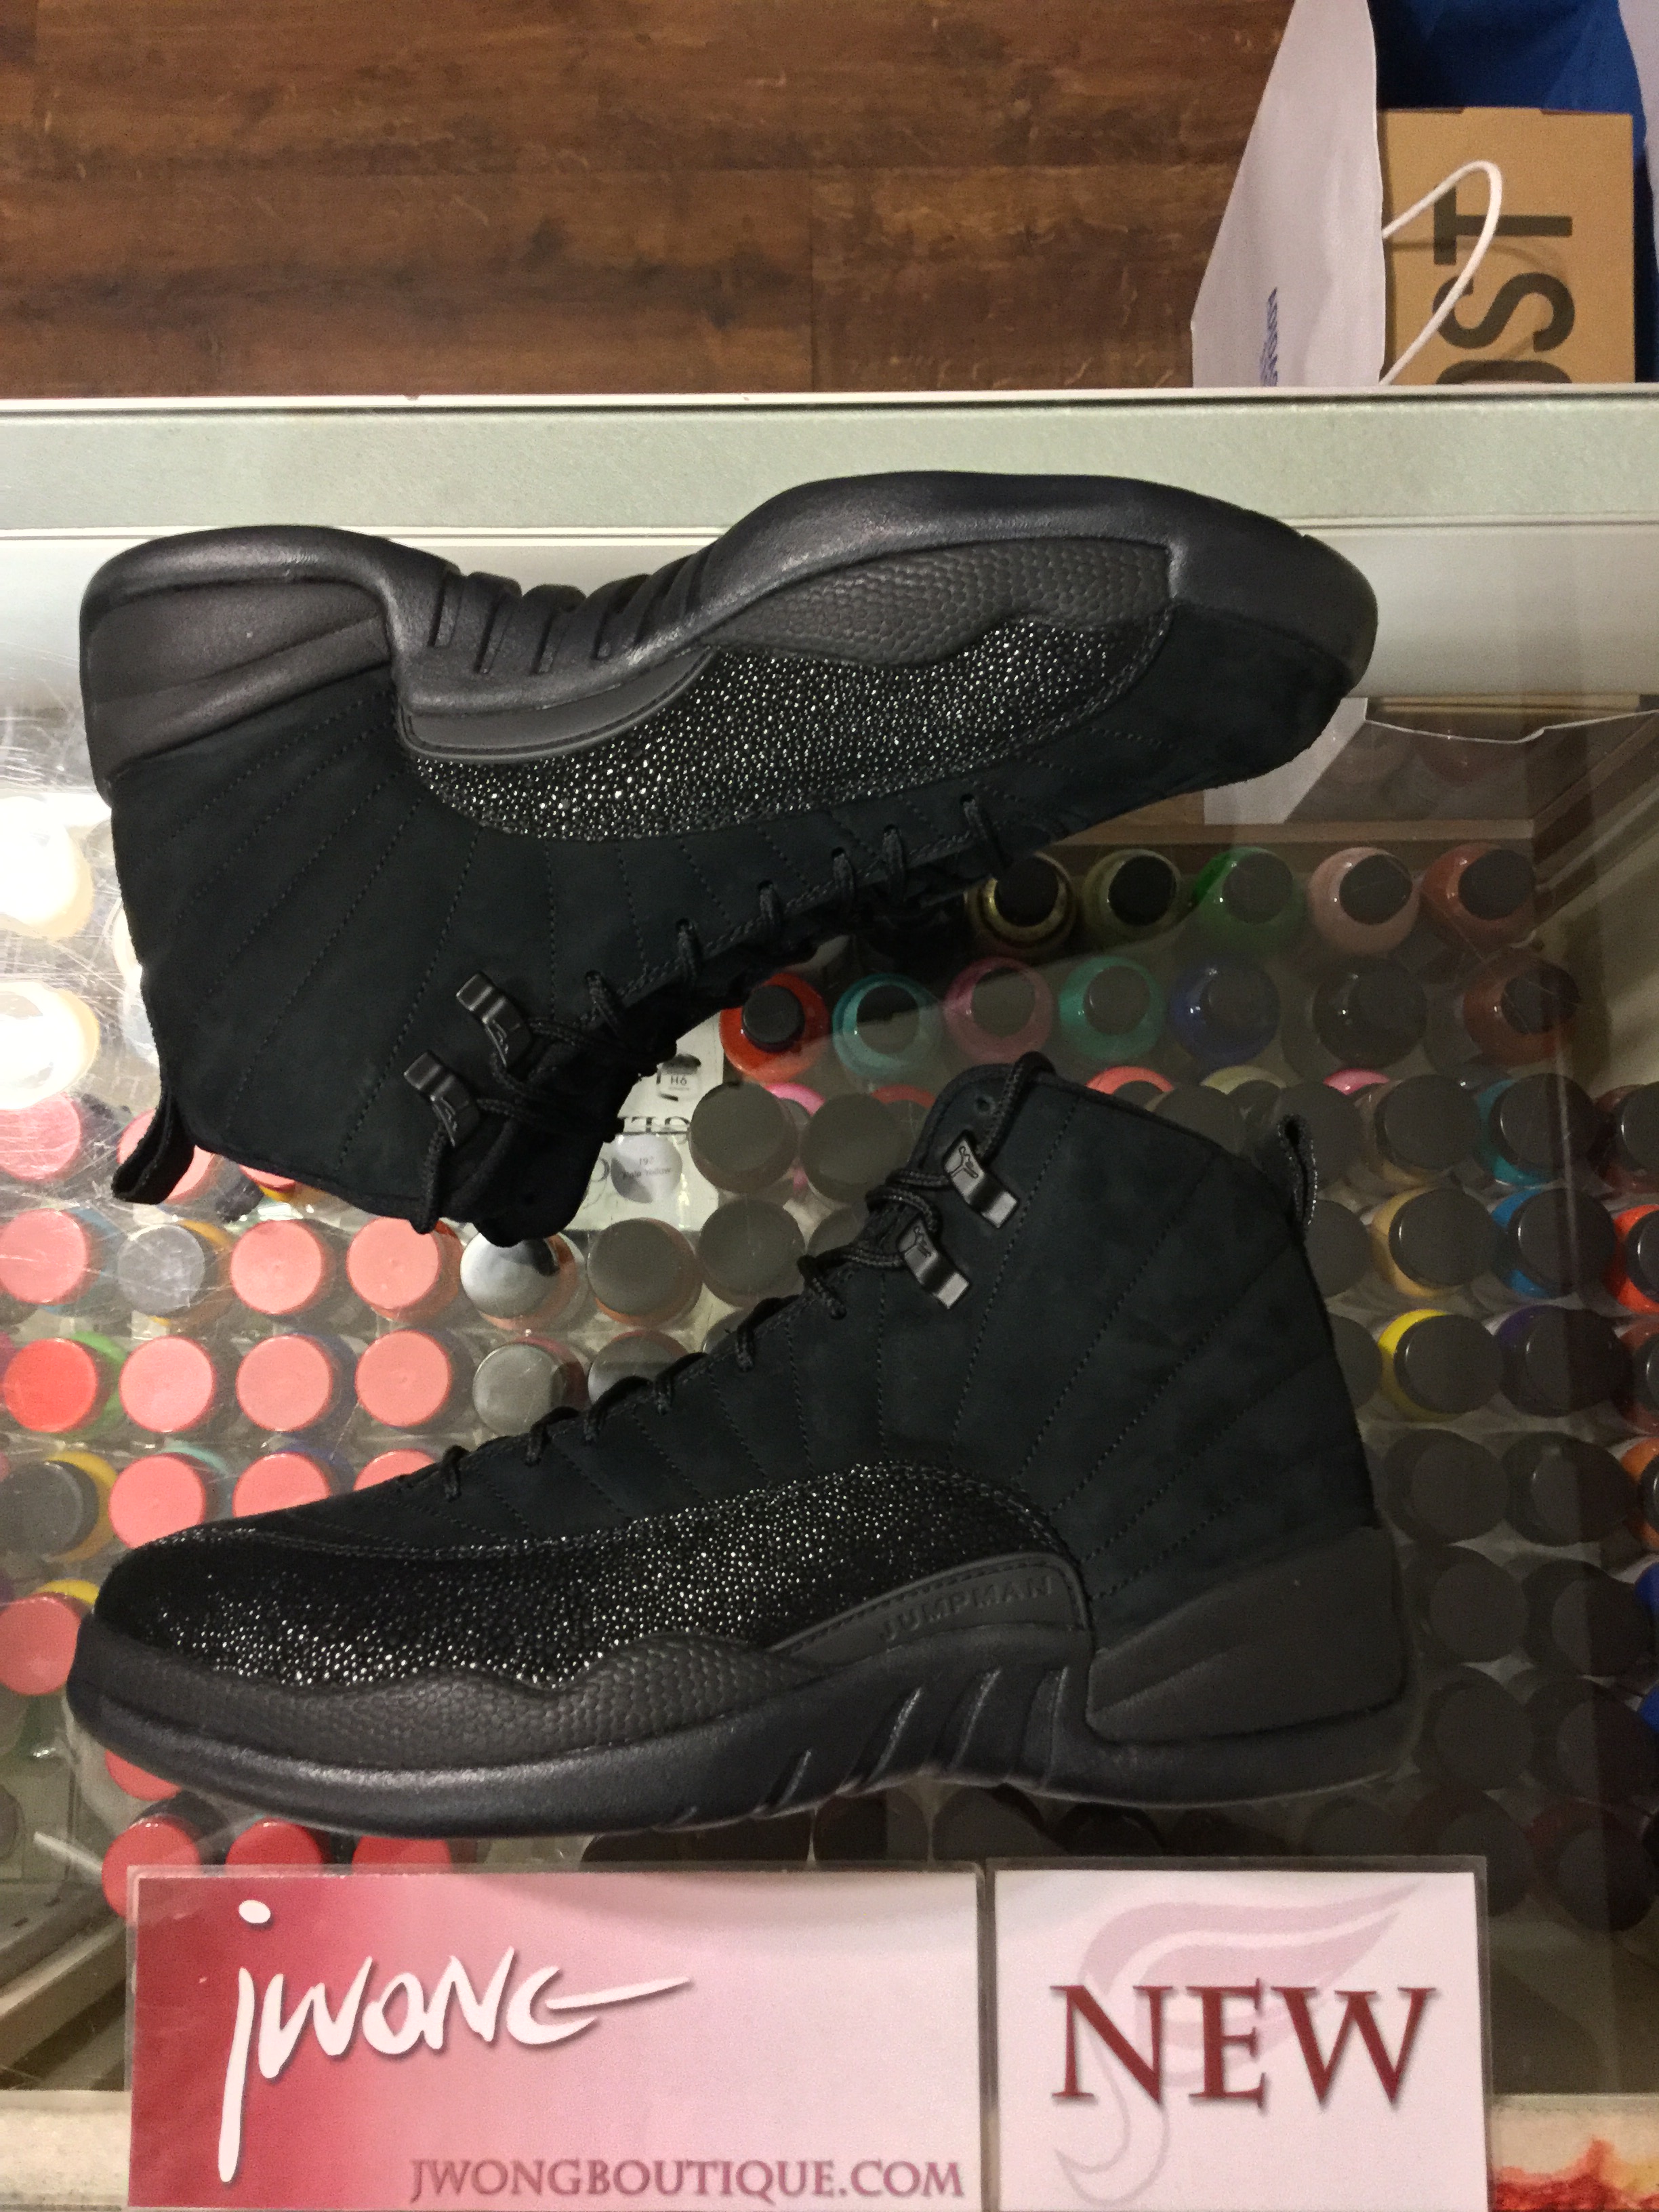 2017 Nike Air Jordan XII OVO Black | Jwong Boutique